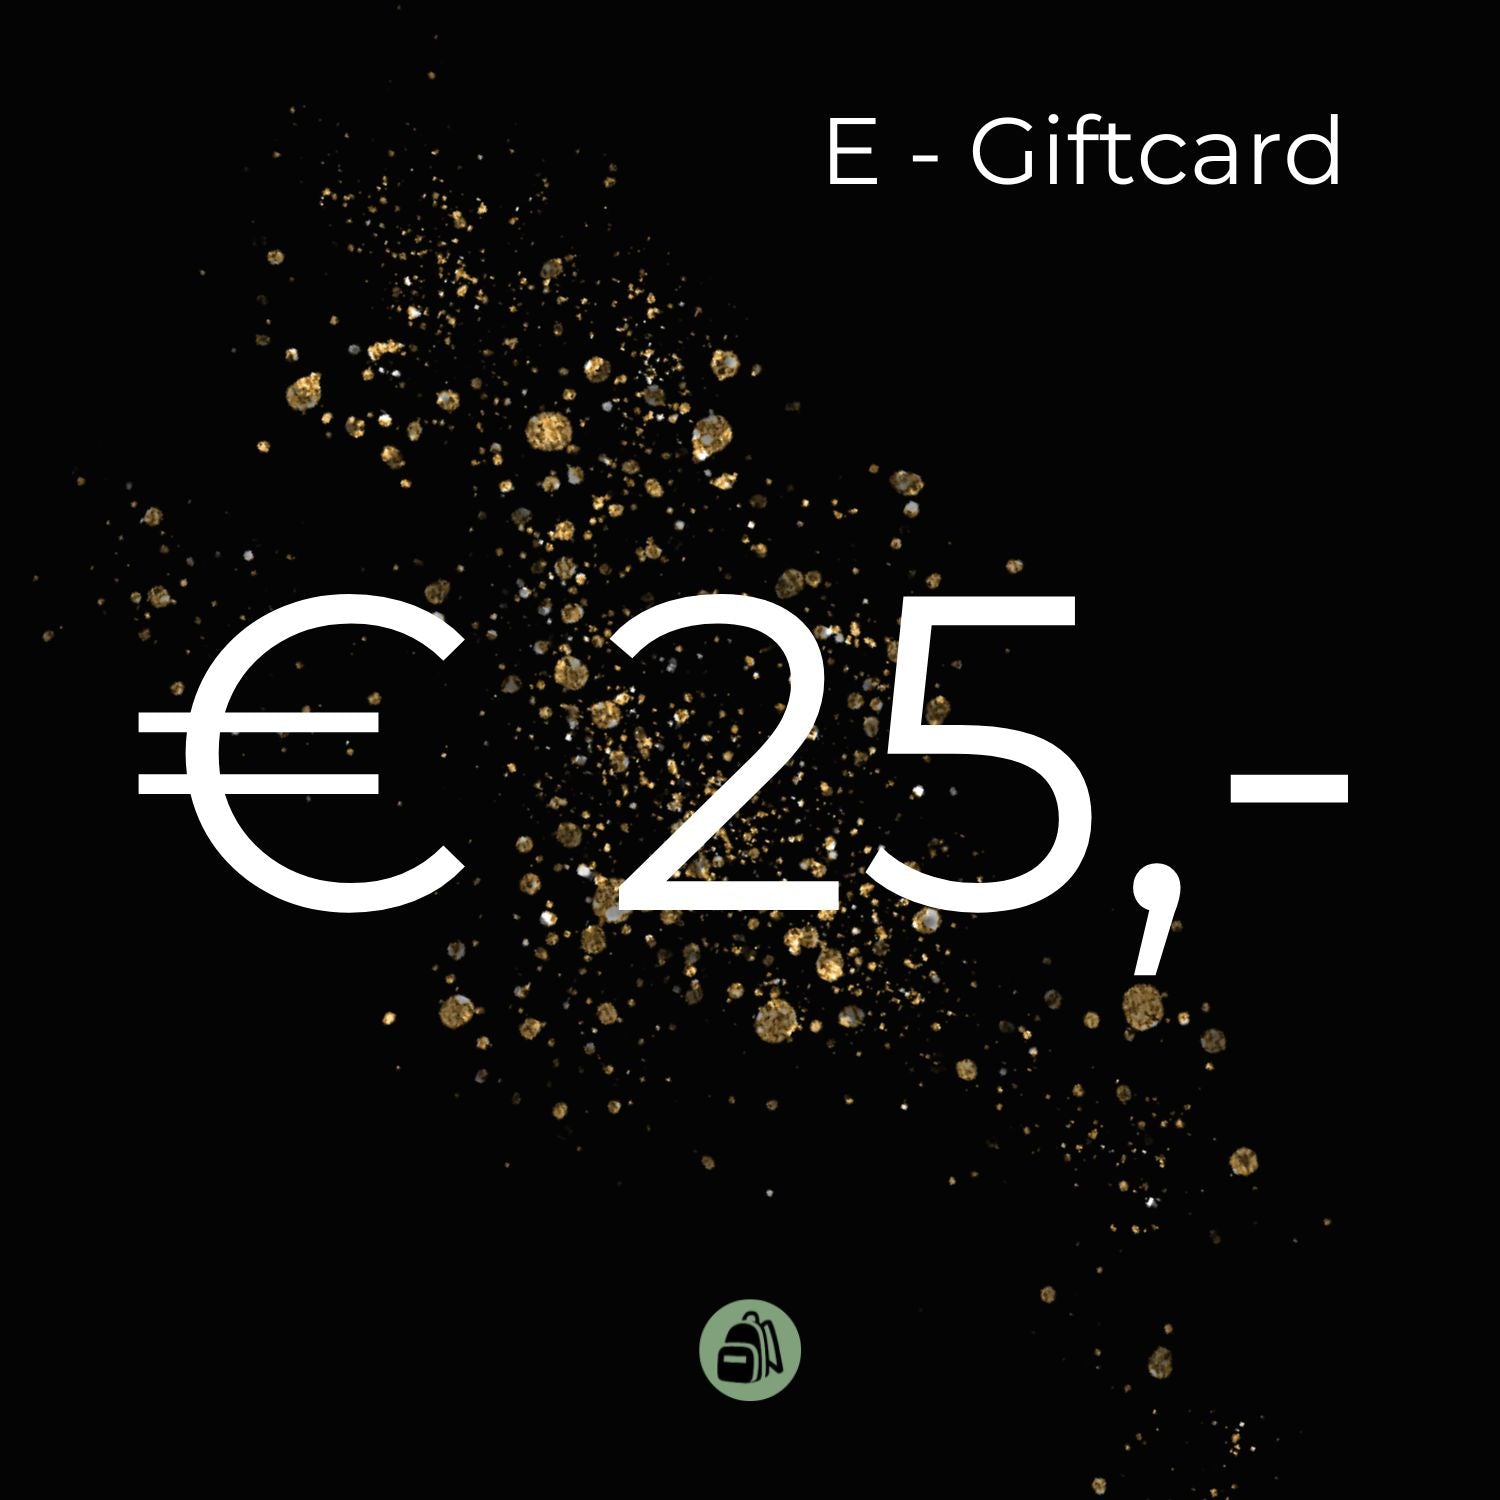 E-giftcard 25 euro de tassenzaak